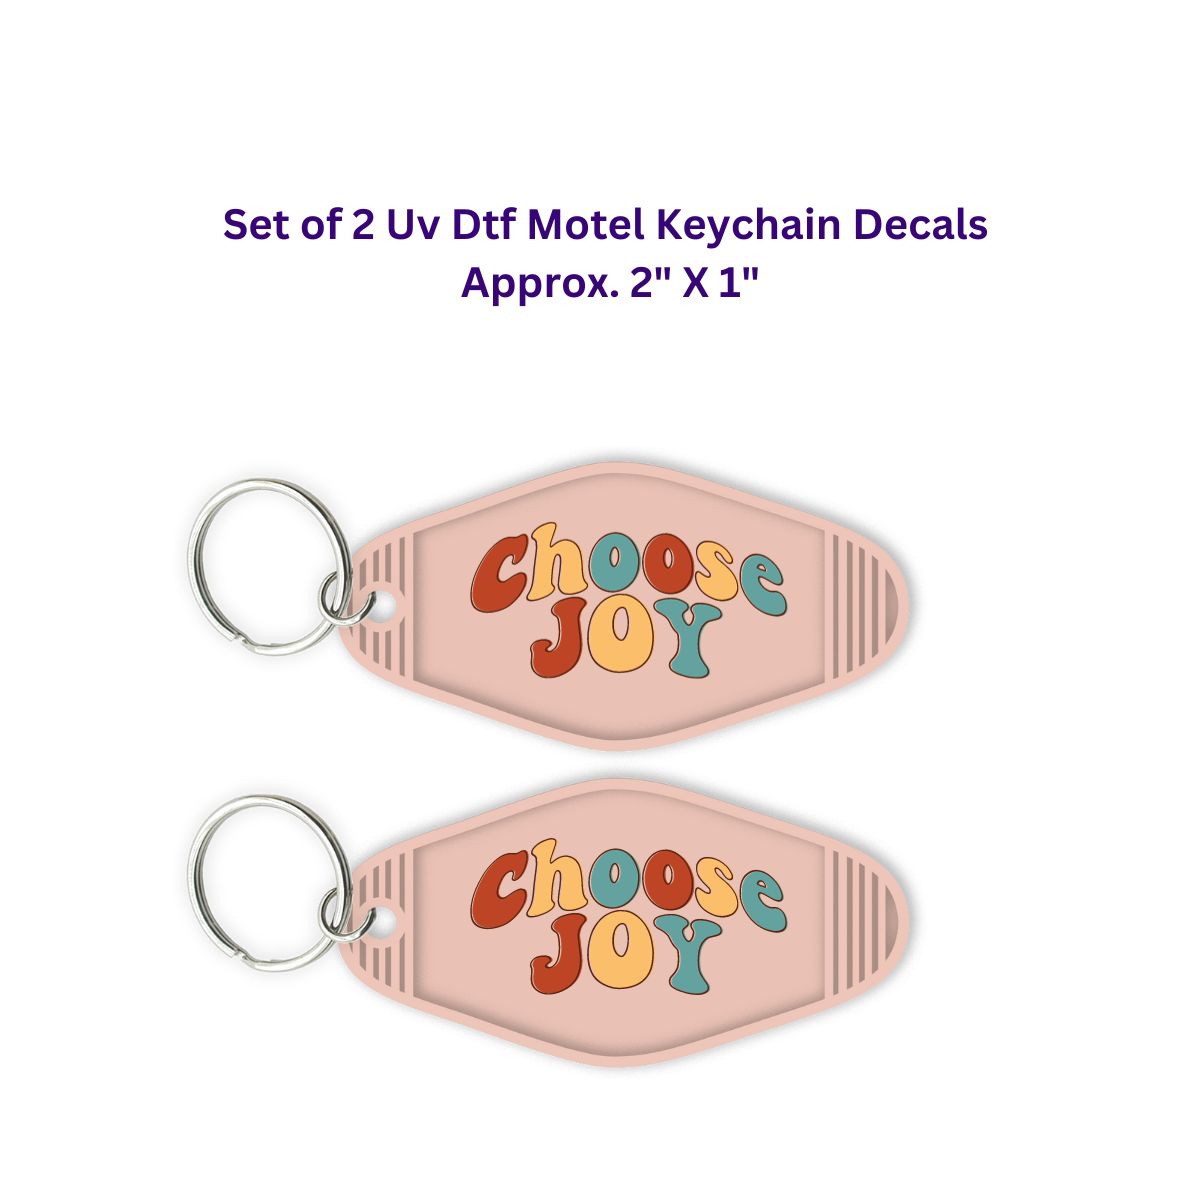 Uv Dtf Decal Set of 2 Motel Keychain Decals Choose Joy